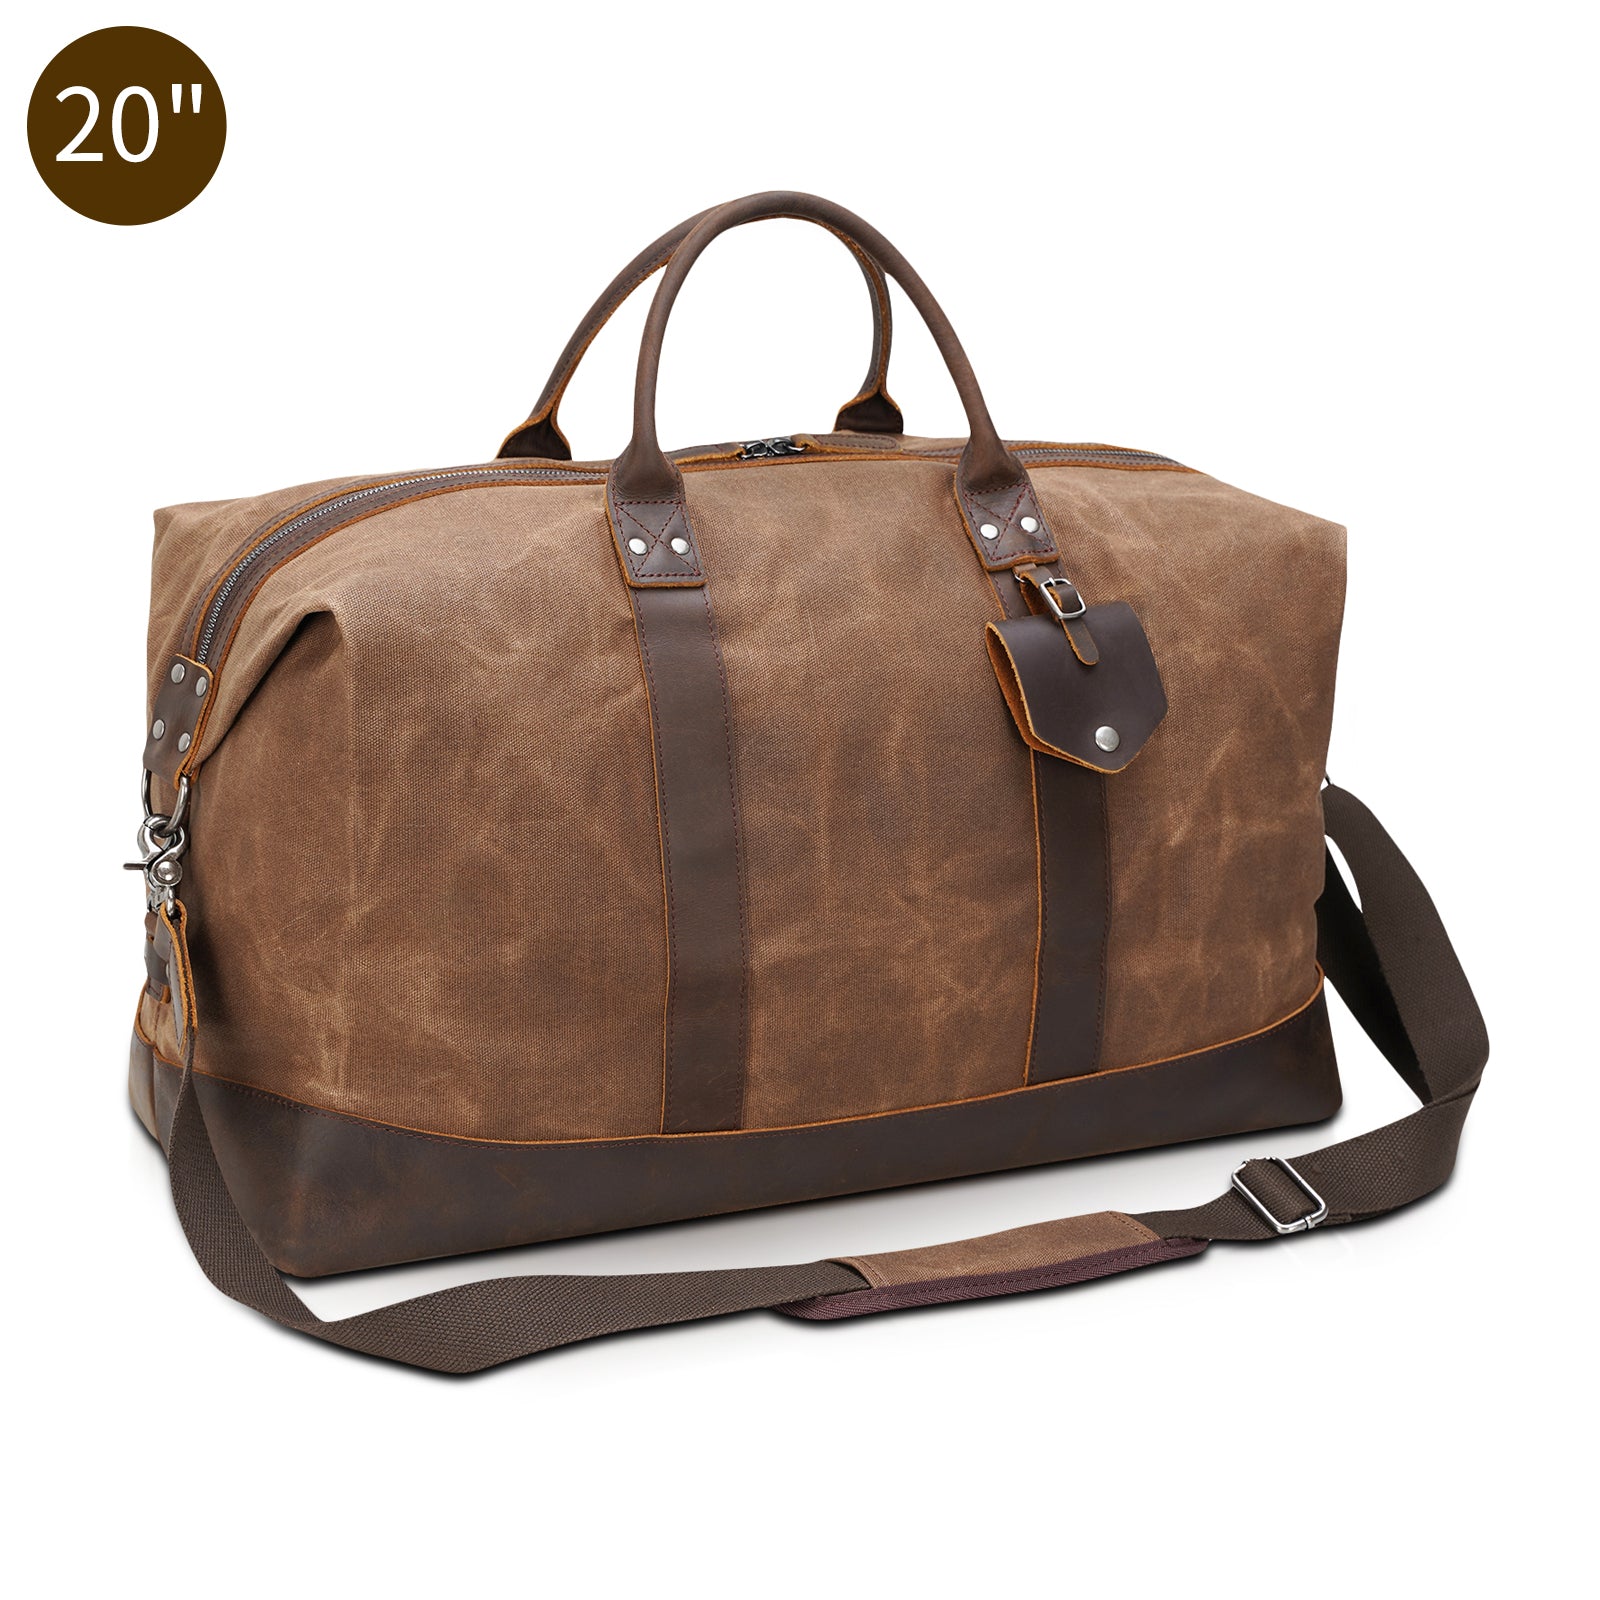 Polare 23/20 Waterproof Travel Duffel Bag Waxed Canvas Cowhide Leath